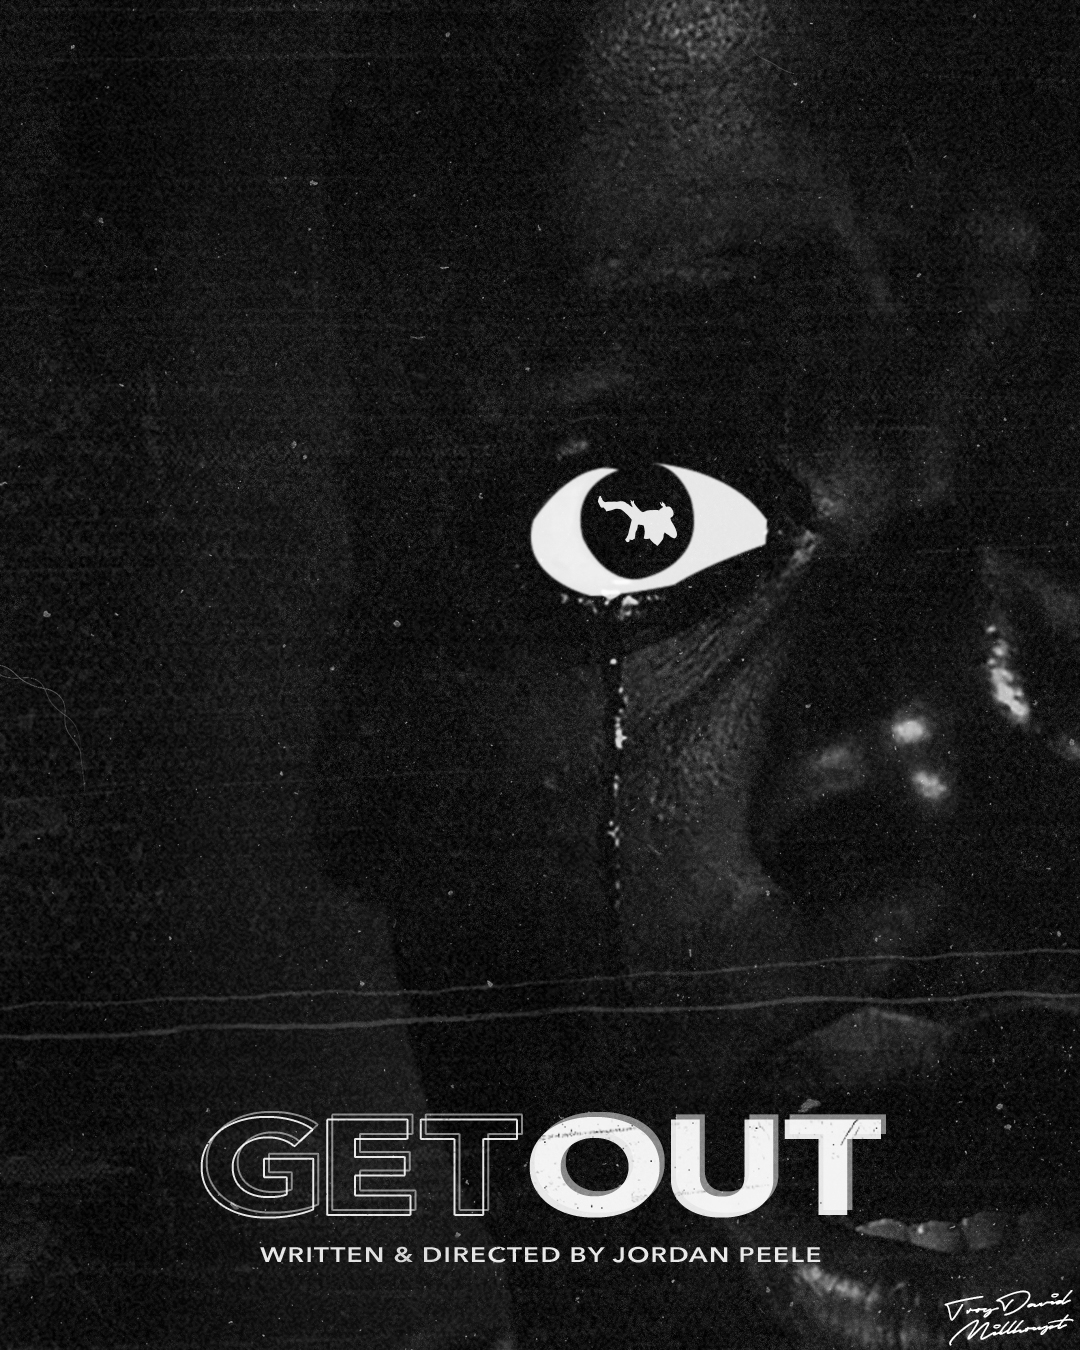 Jordan Peele shares a much darker, original ending for ‘Get Out’